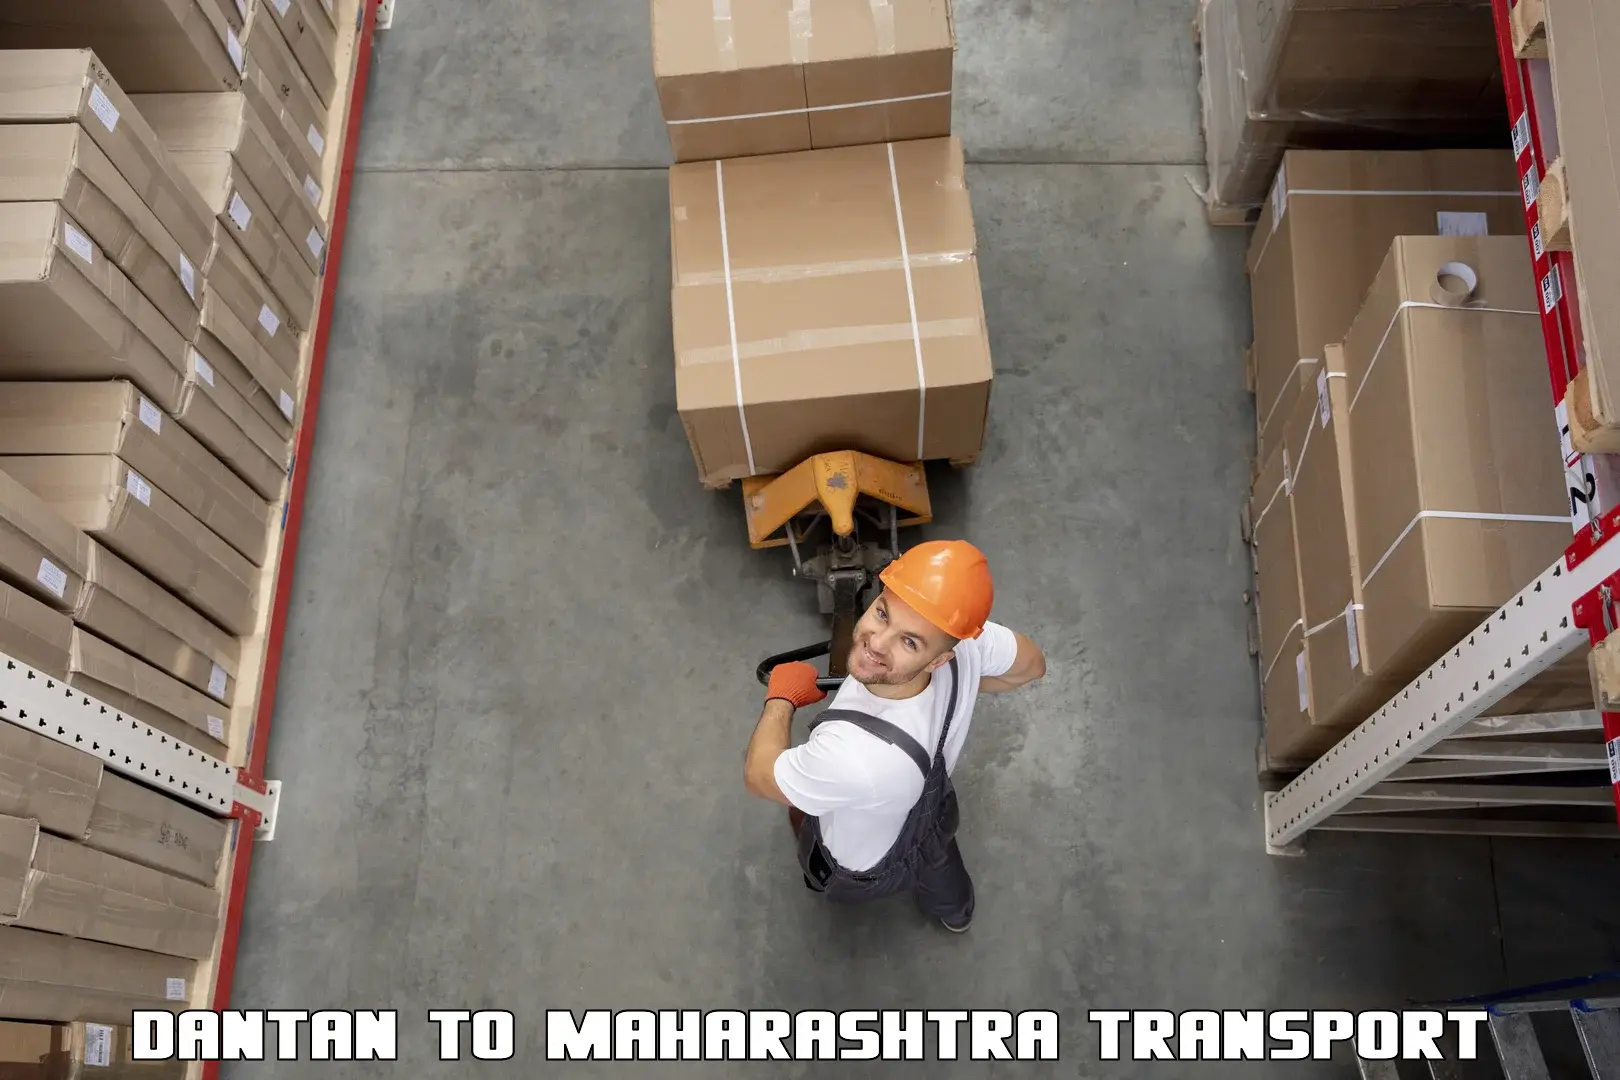 Container transport service Dantan to Mumbai Port